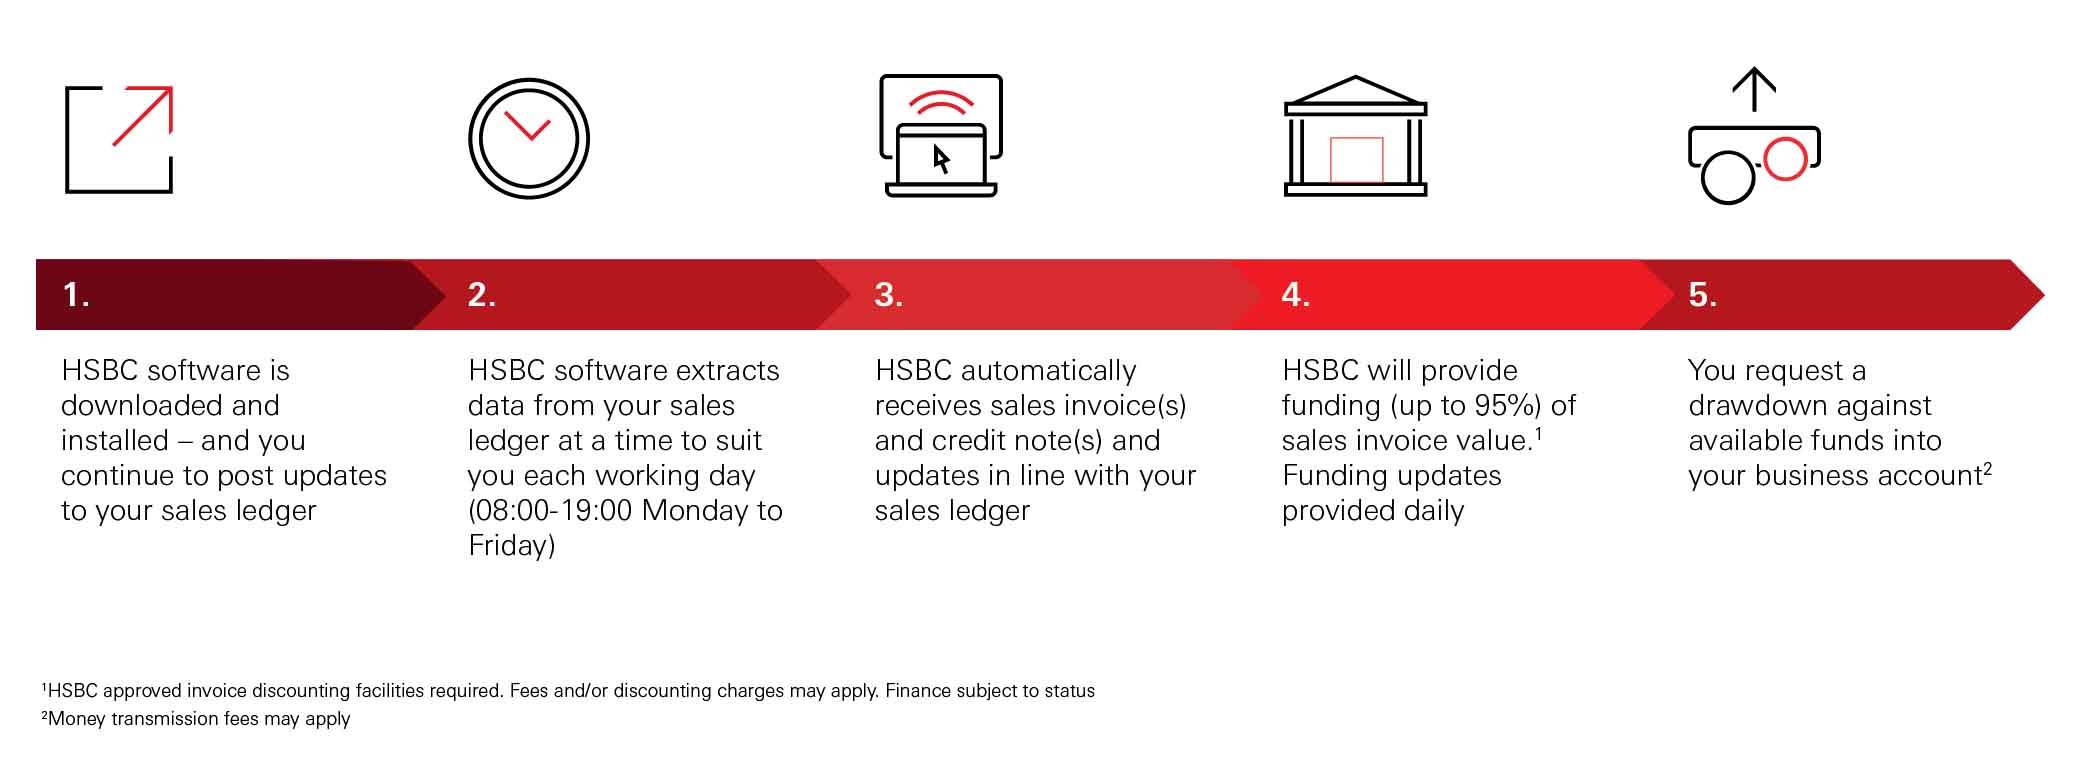 HSBC Digital Process Infographic  